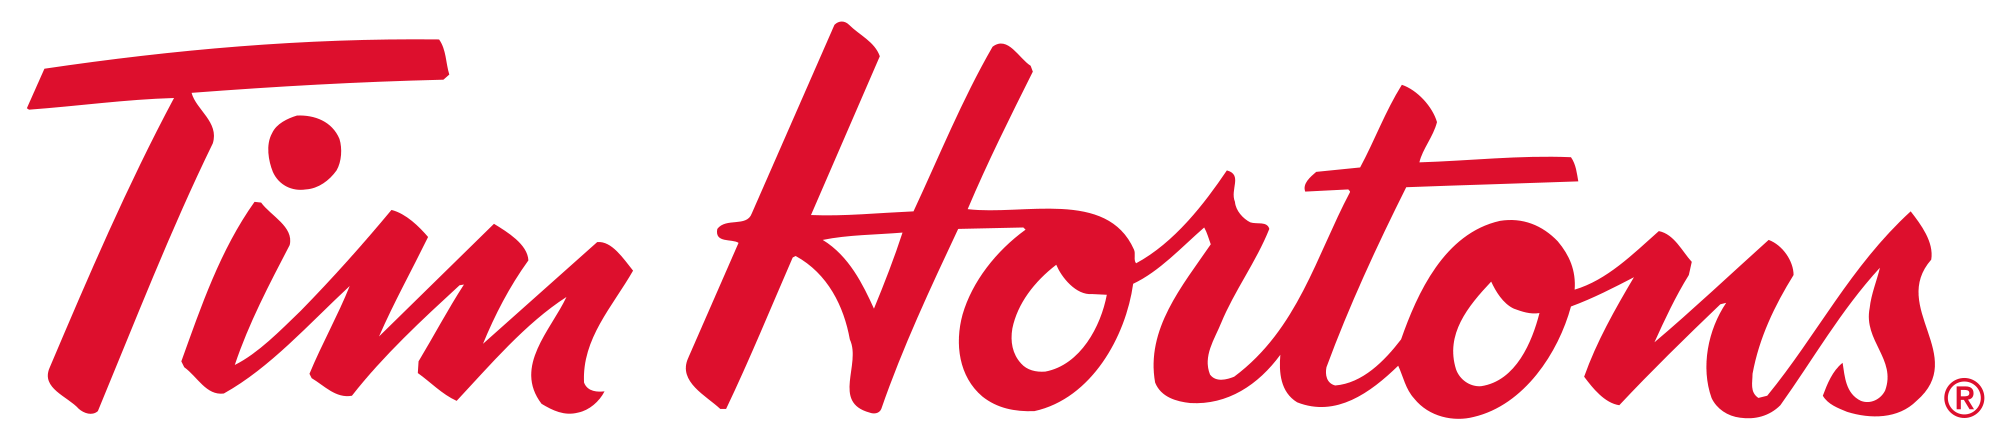 Tim Hortons Logo - File:Tim Hortons logo.svg - Wikimedia Commons